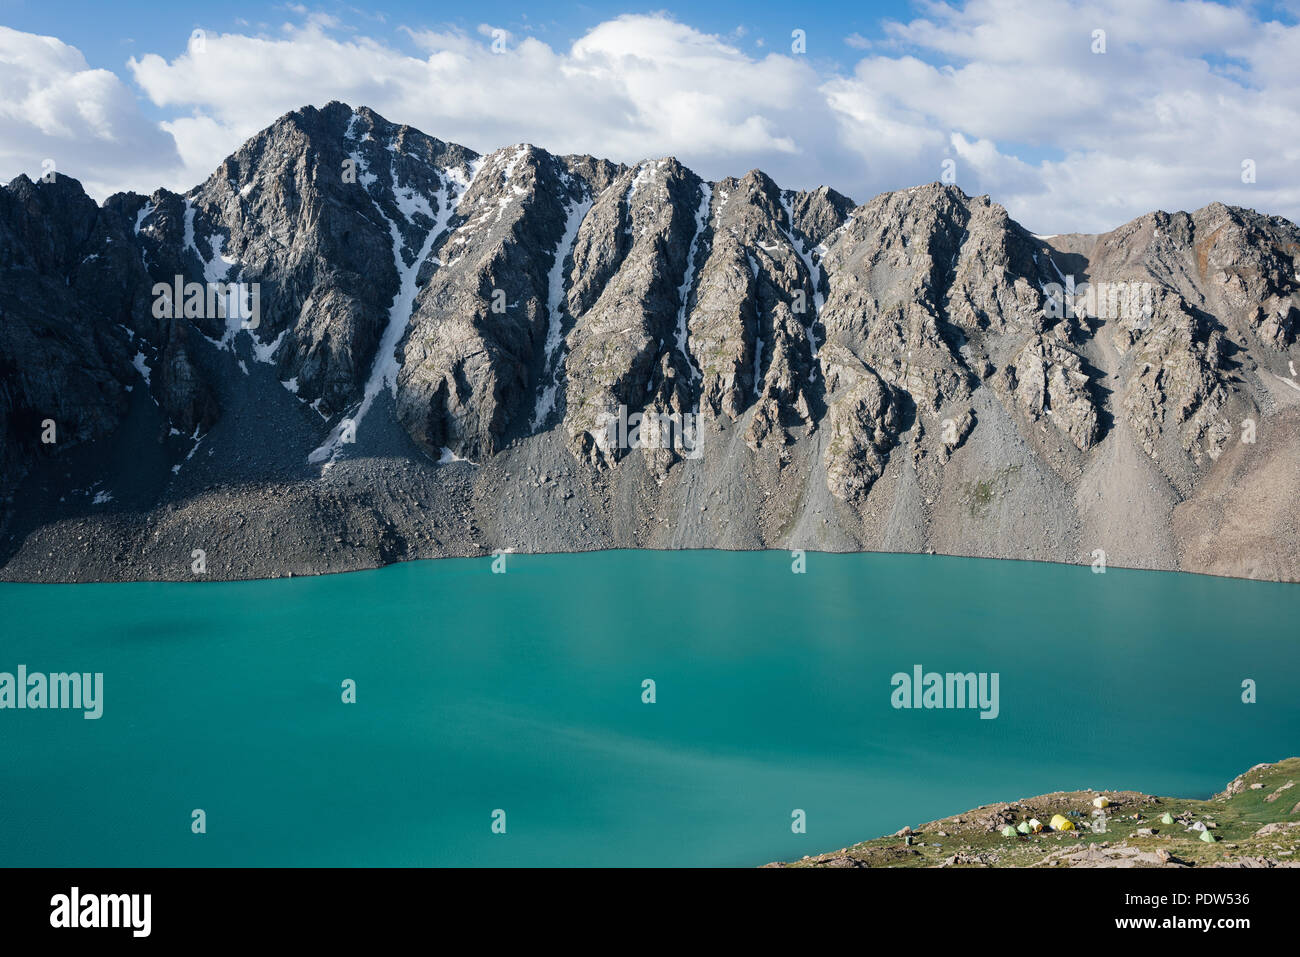 Ala Kul Lake in Kyrgyzstan Stock Photo